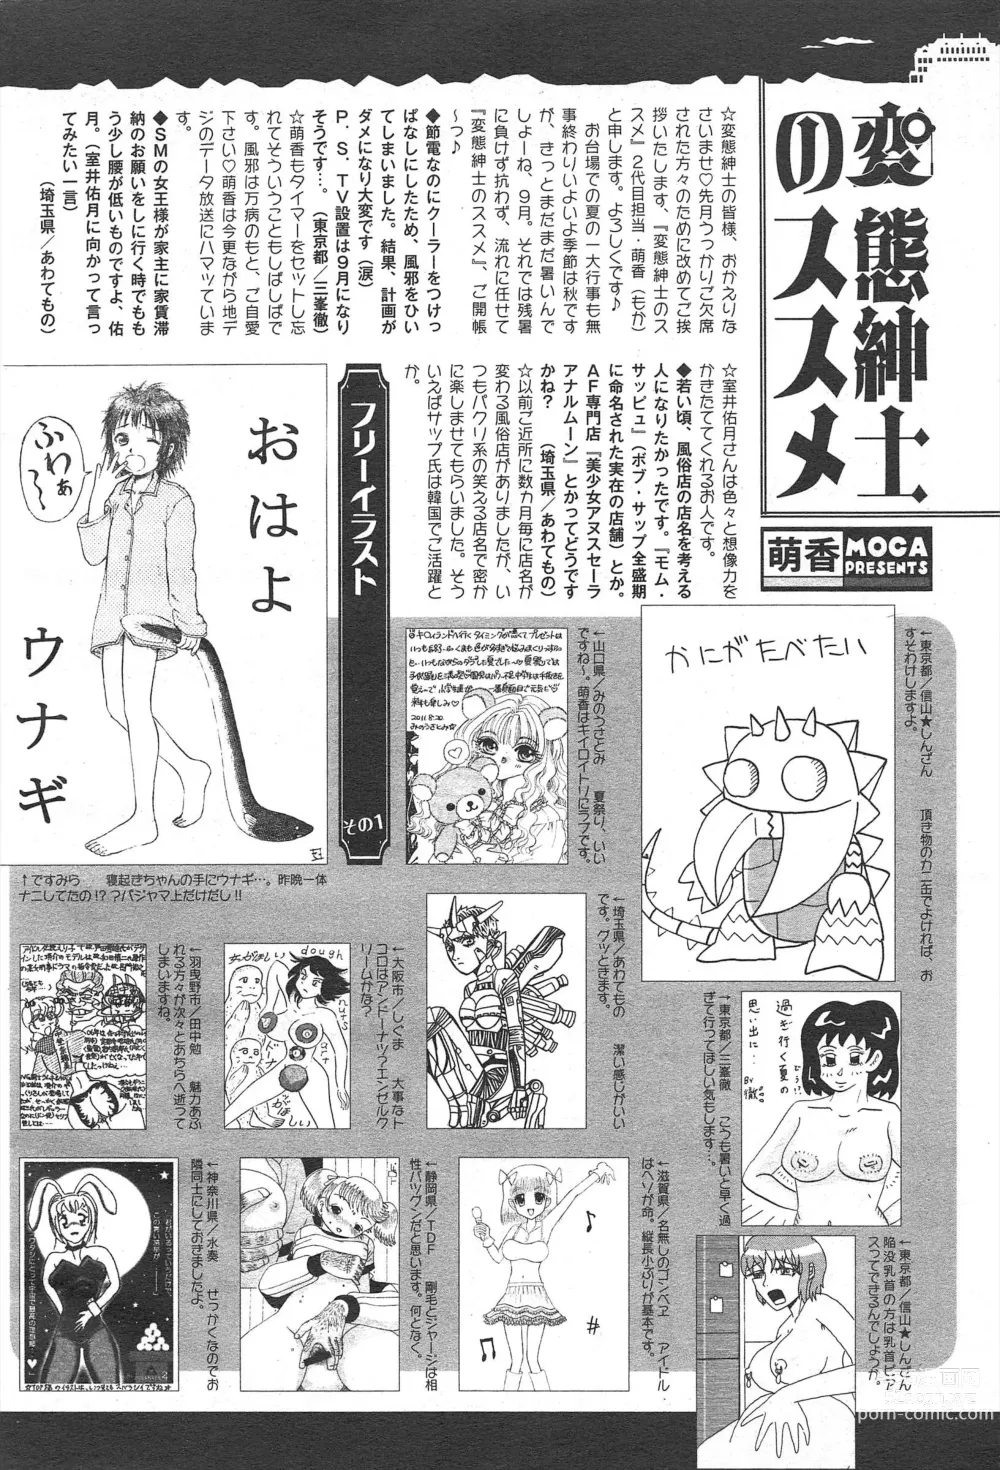 Page 326 of manga COMIC Megamilk 2011-10 Vol.16